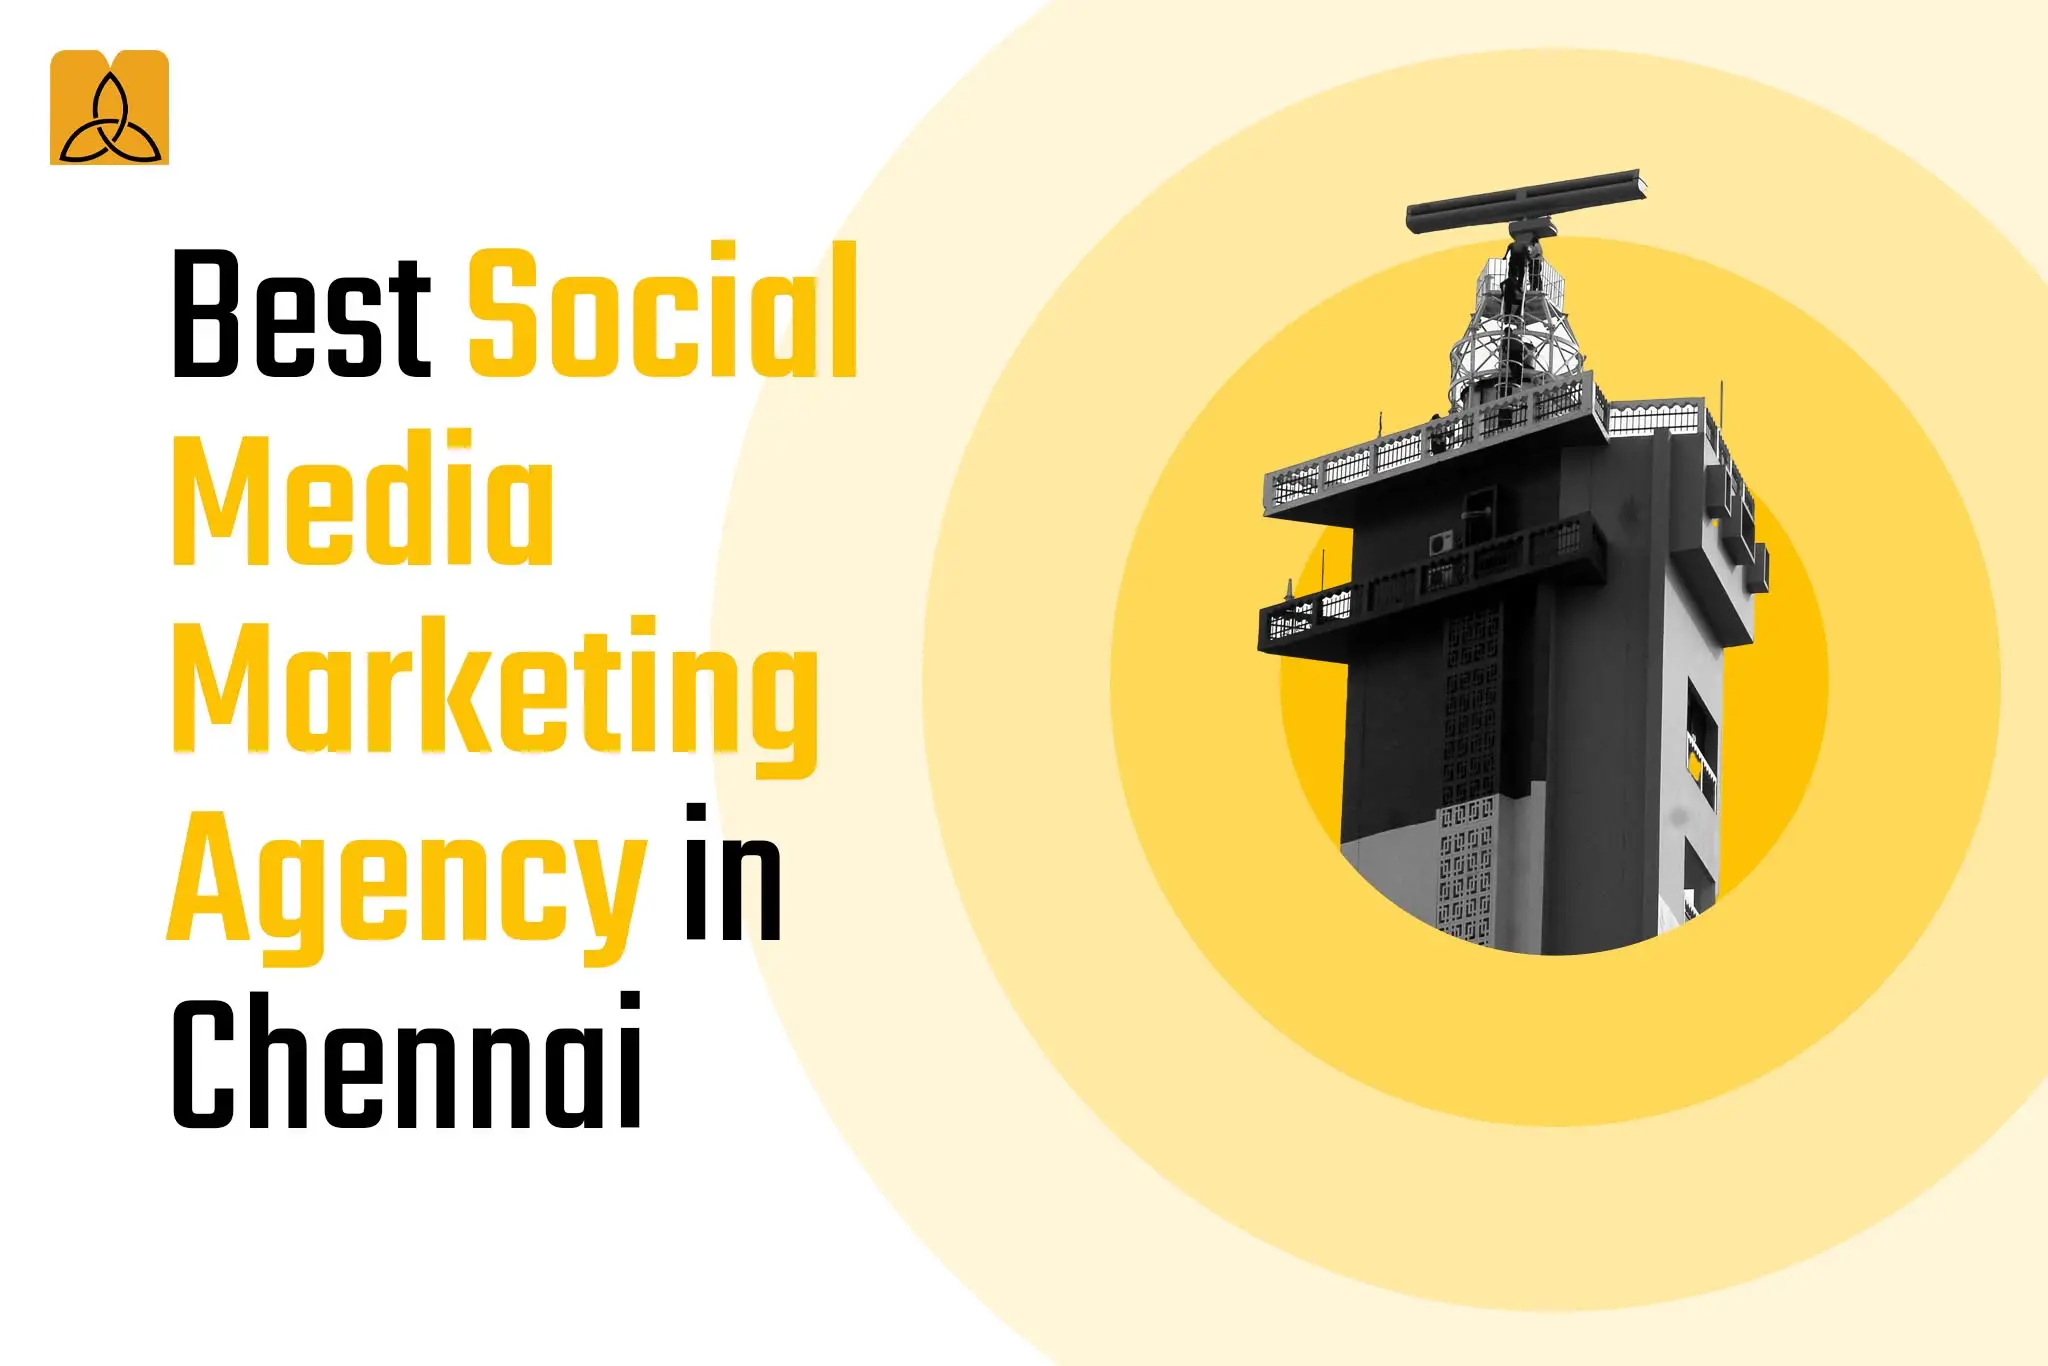 Social Media Marketing Agency in Chennai